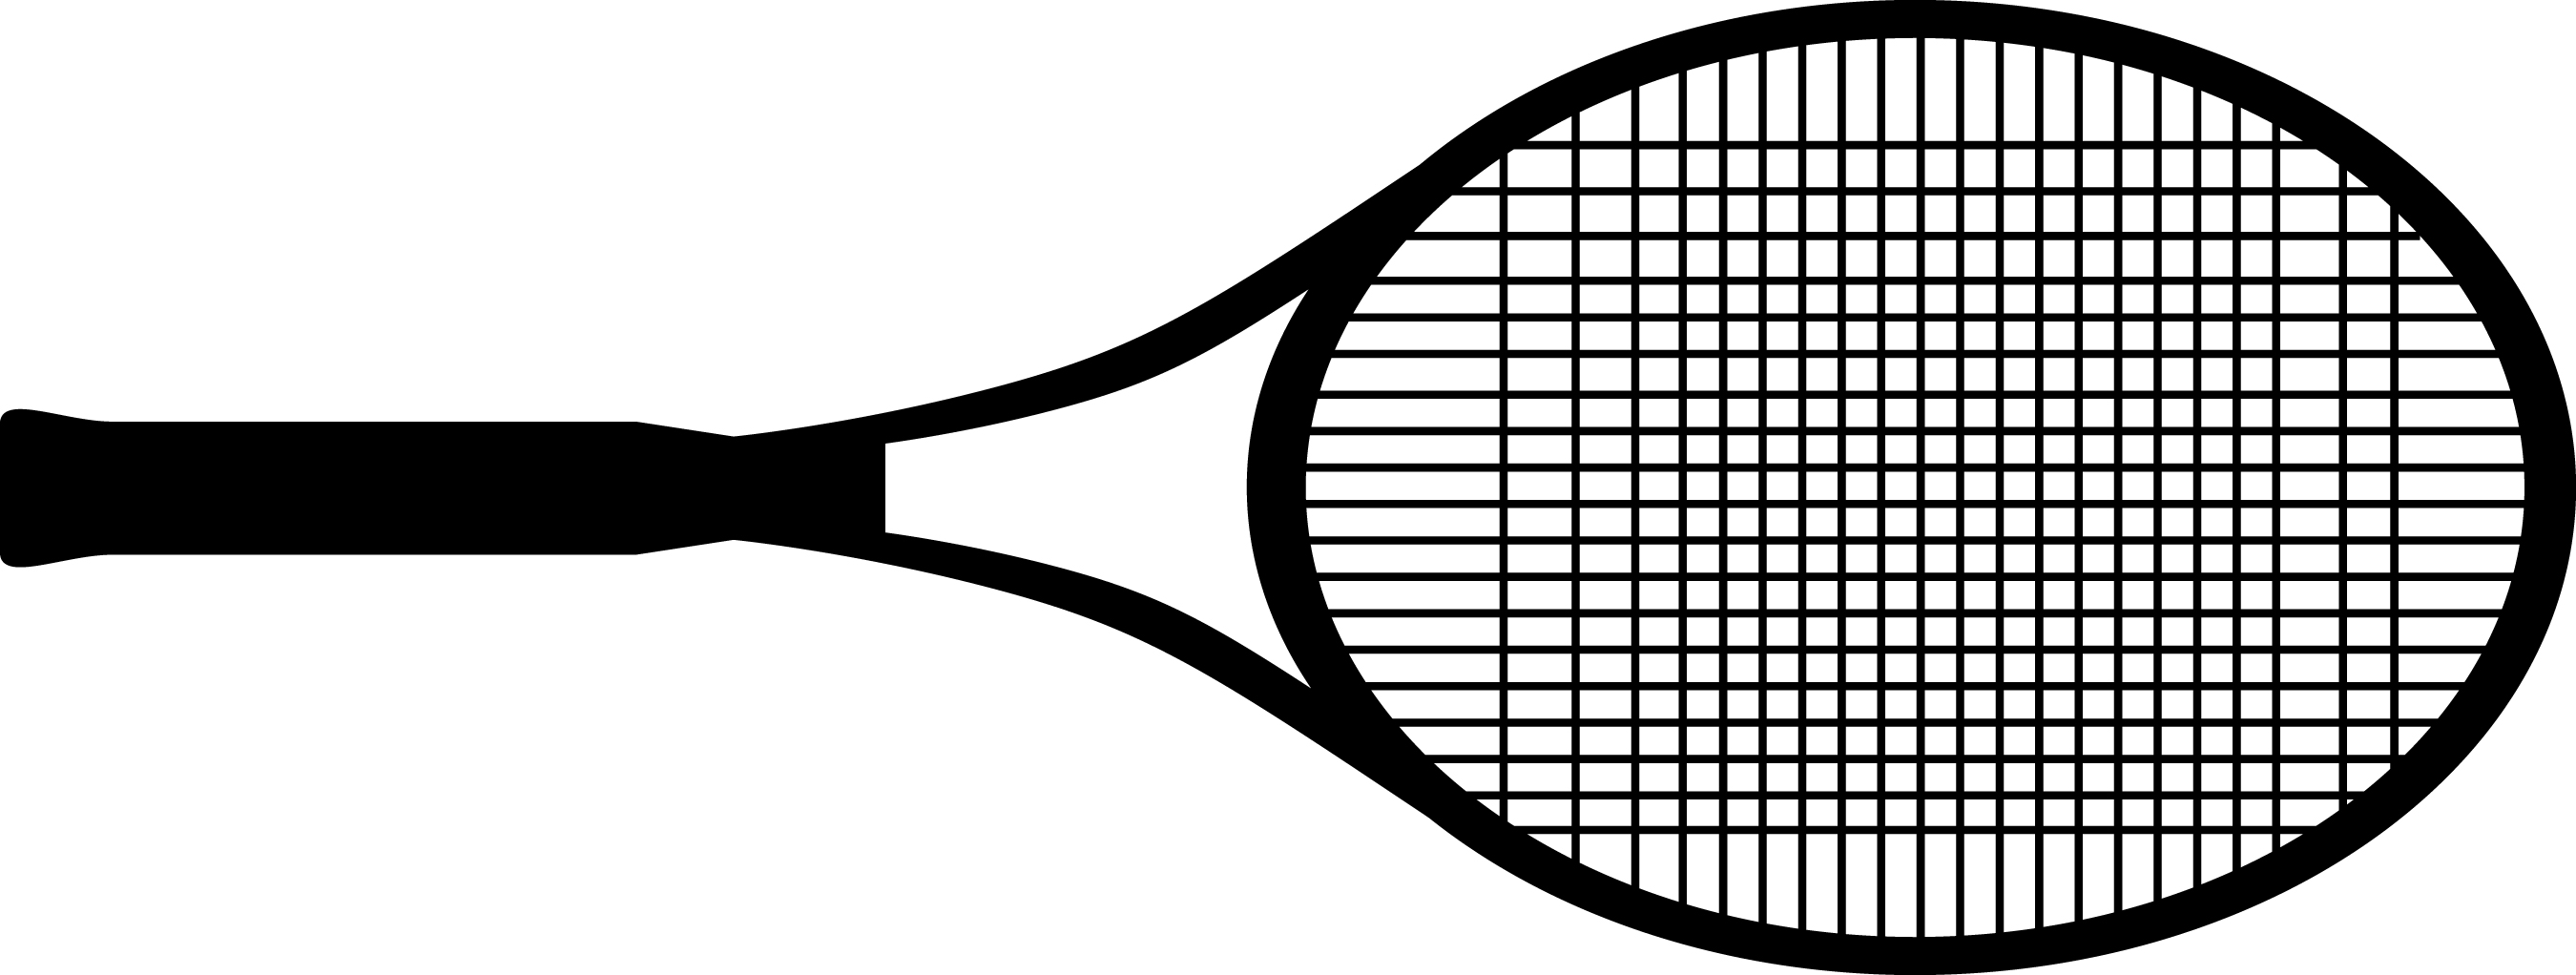 Tennis Racket Clip Art At Clk